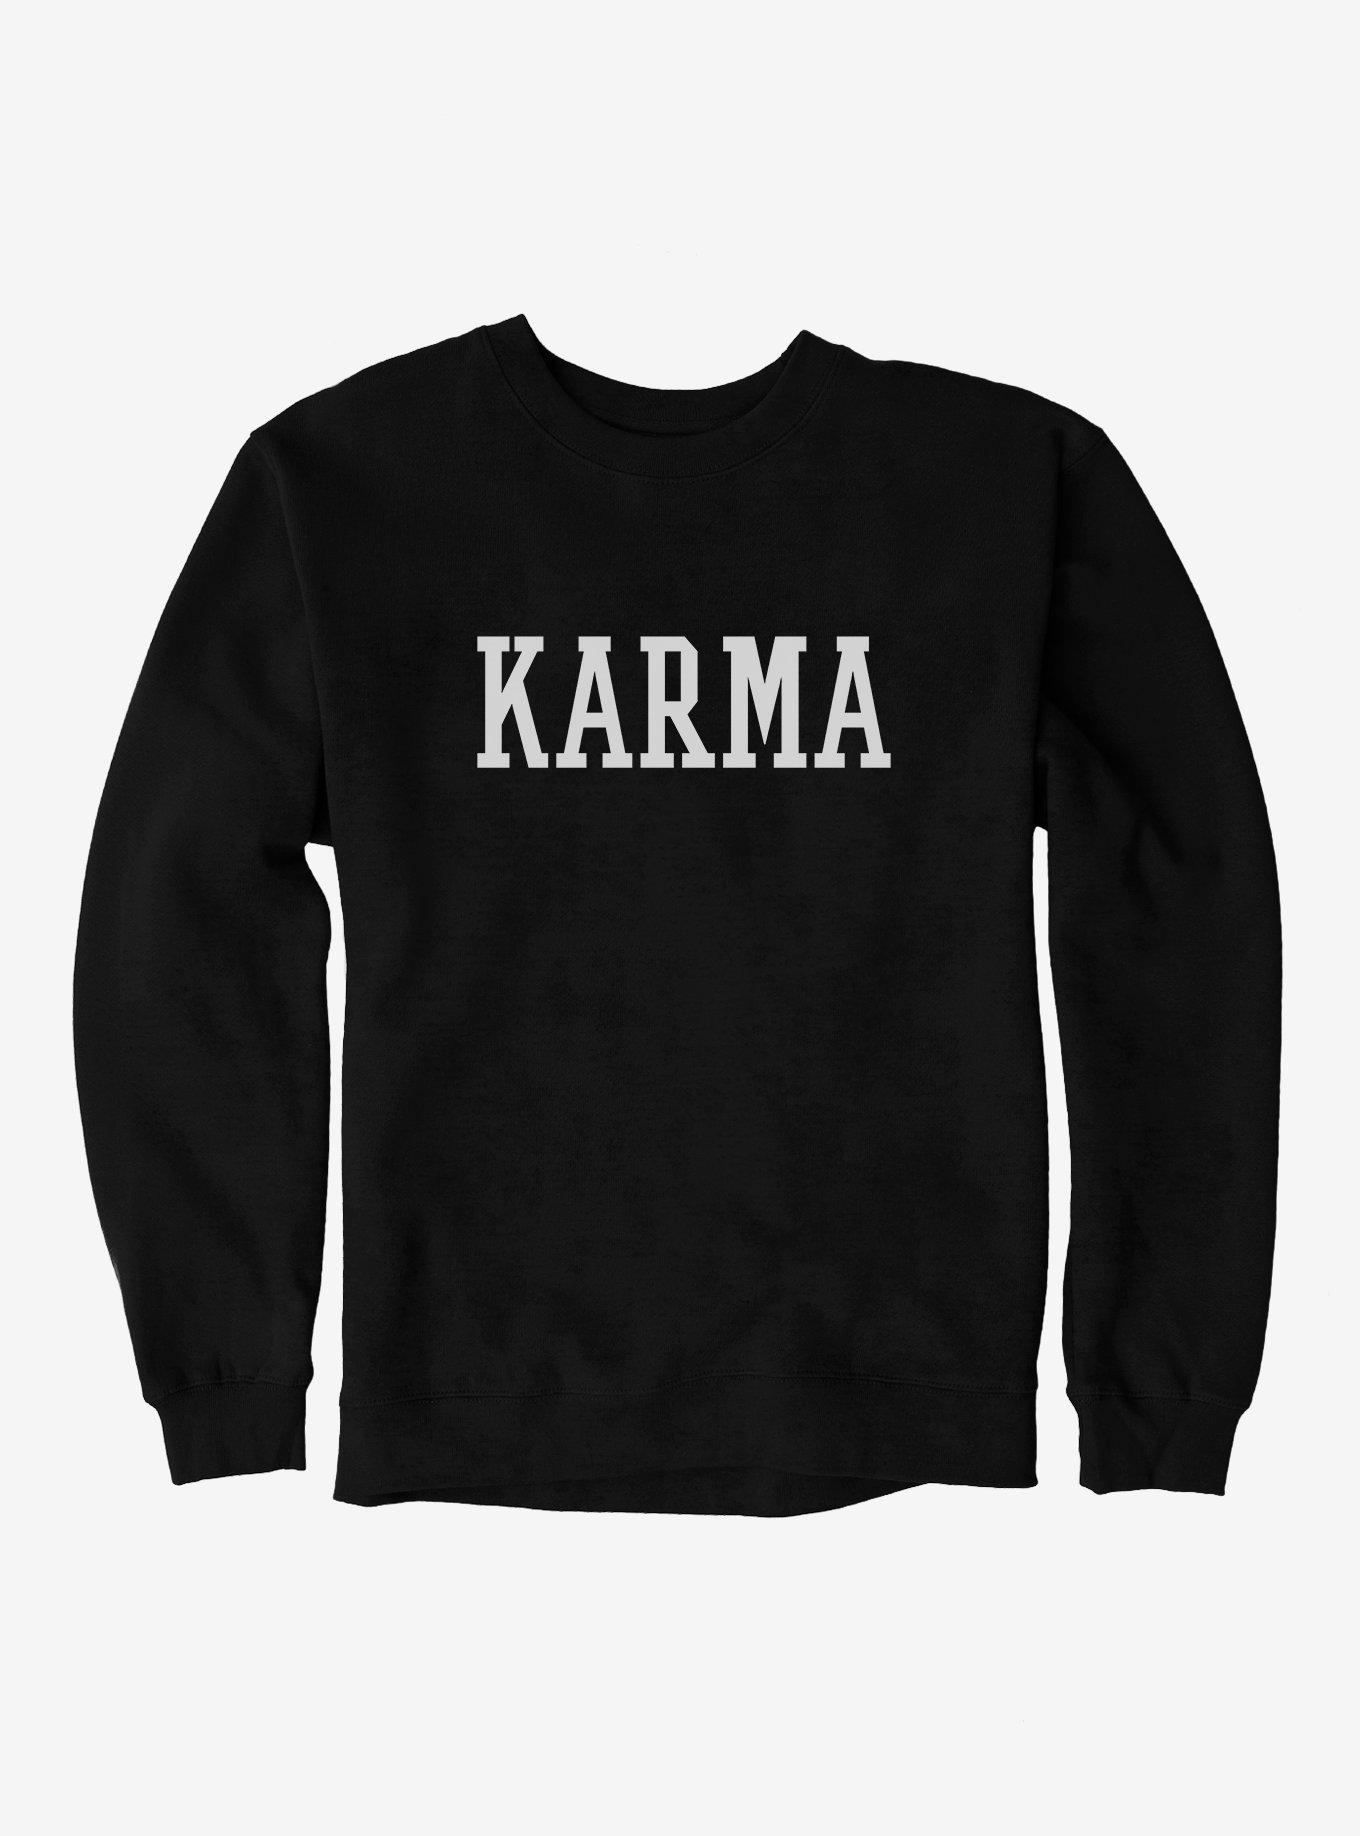 Karma Collegiate Text Sweatshirt